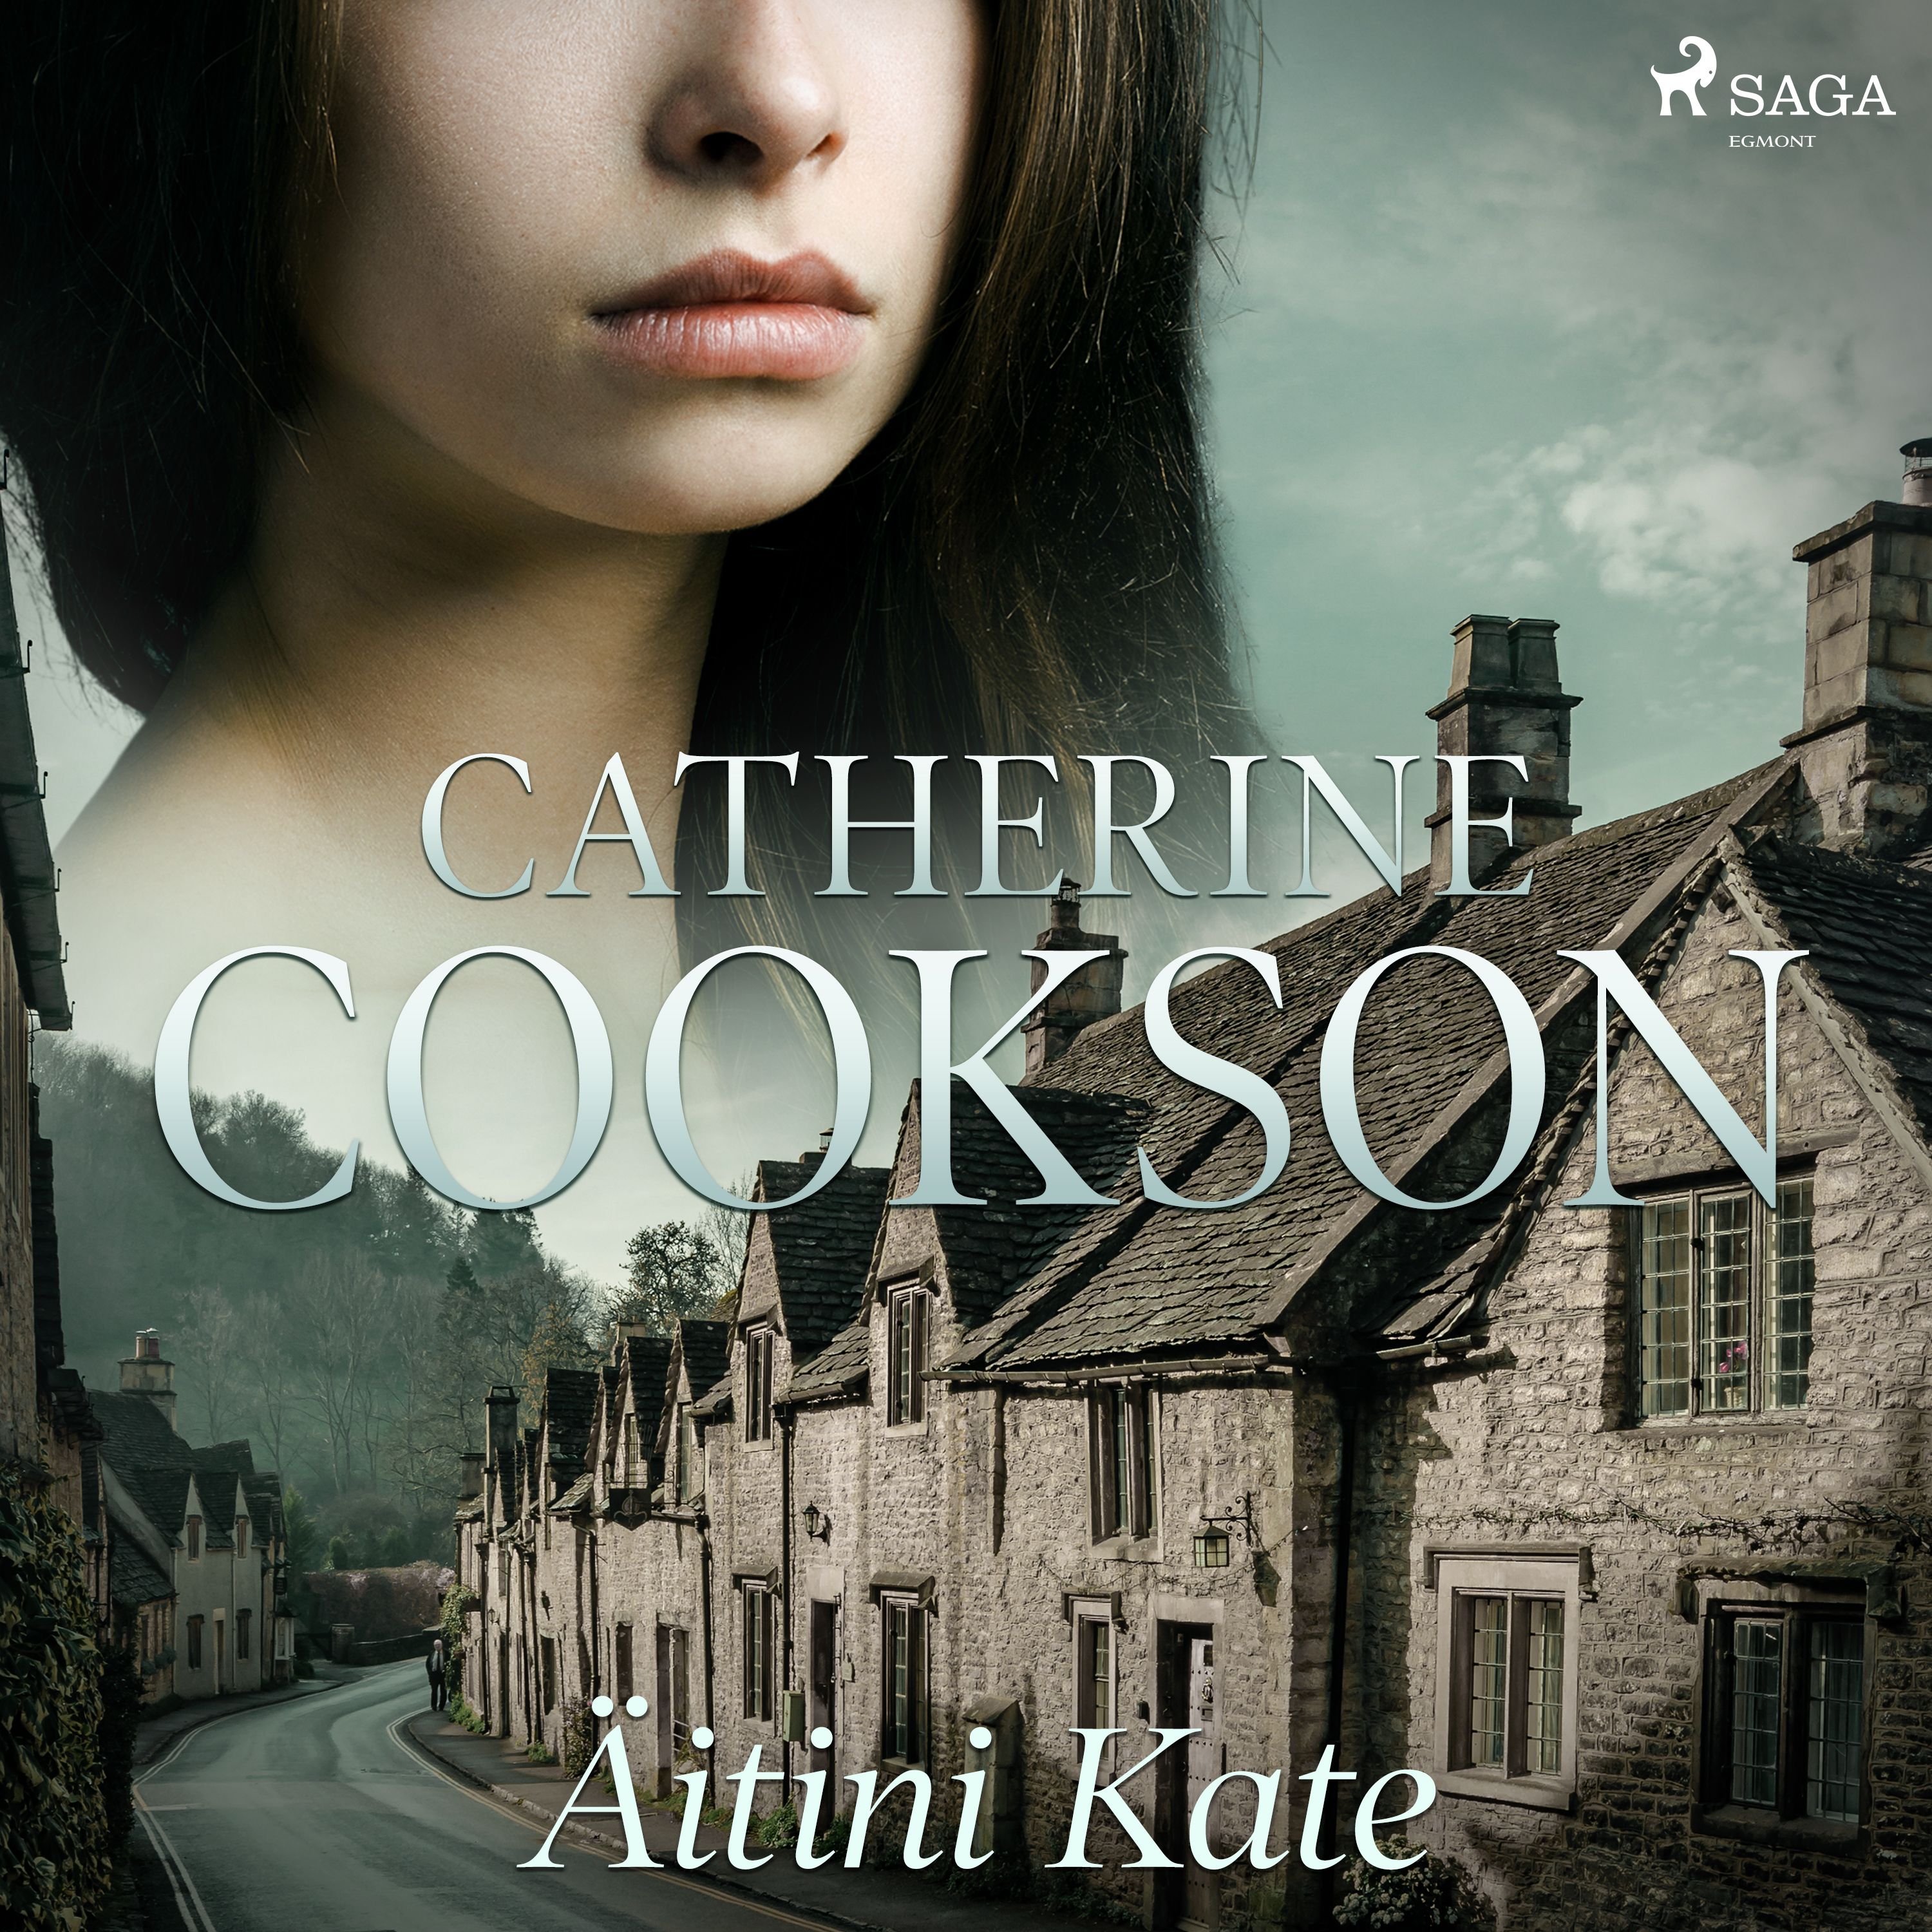 Äitini Kate, audiobook by Catherine Cookson